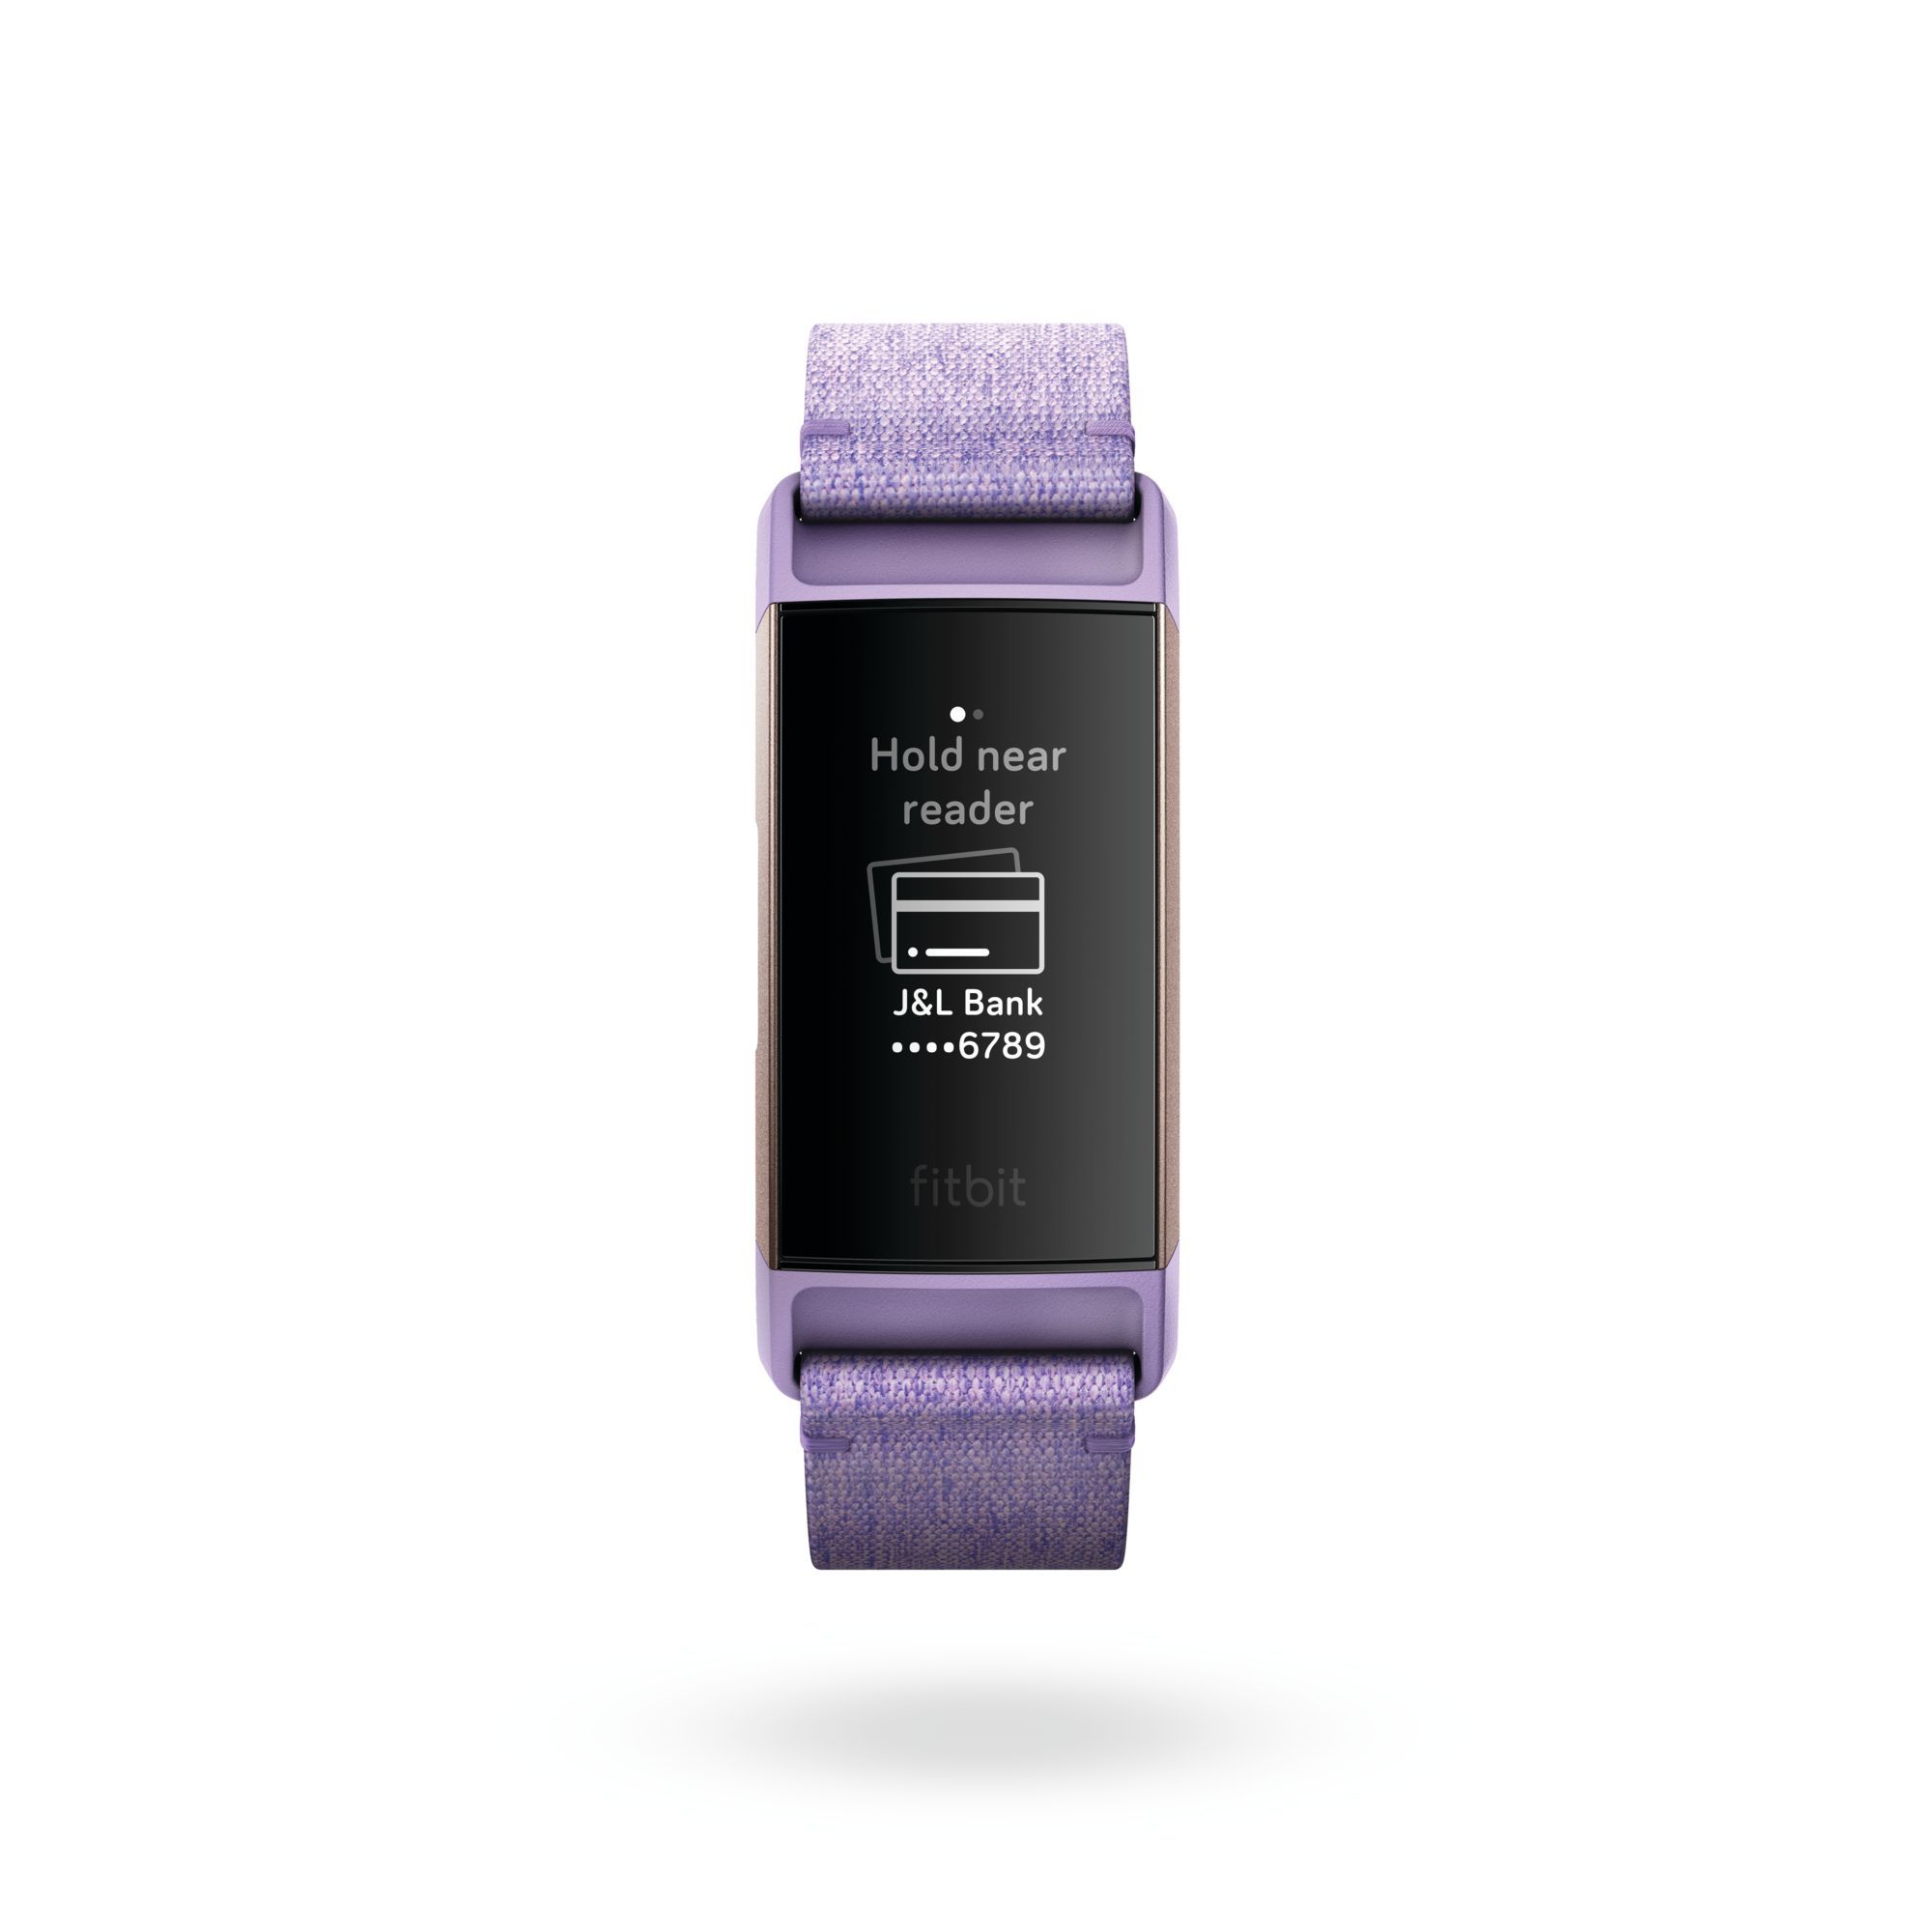 Fitbit Charge 3 фитнес-группа с экраном оплаты.